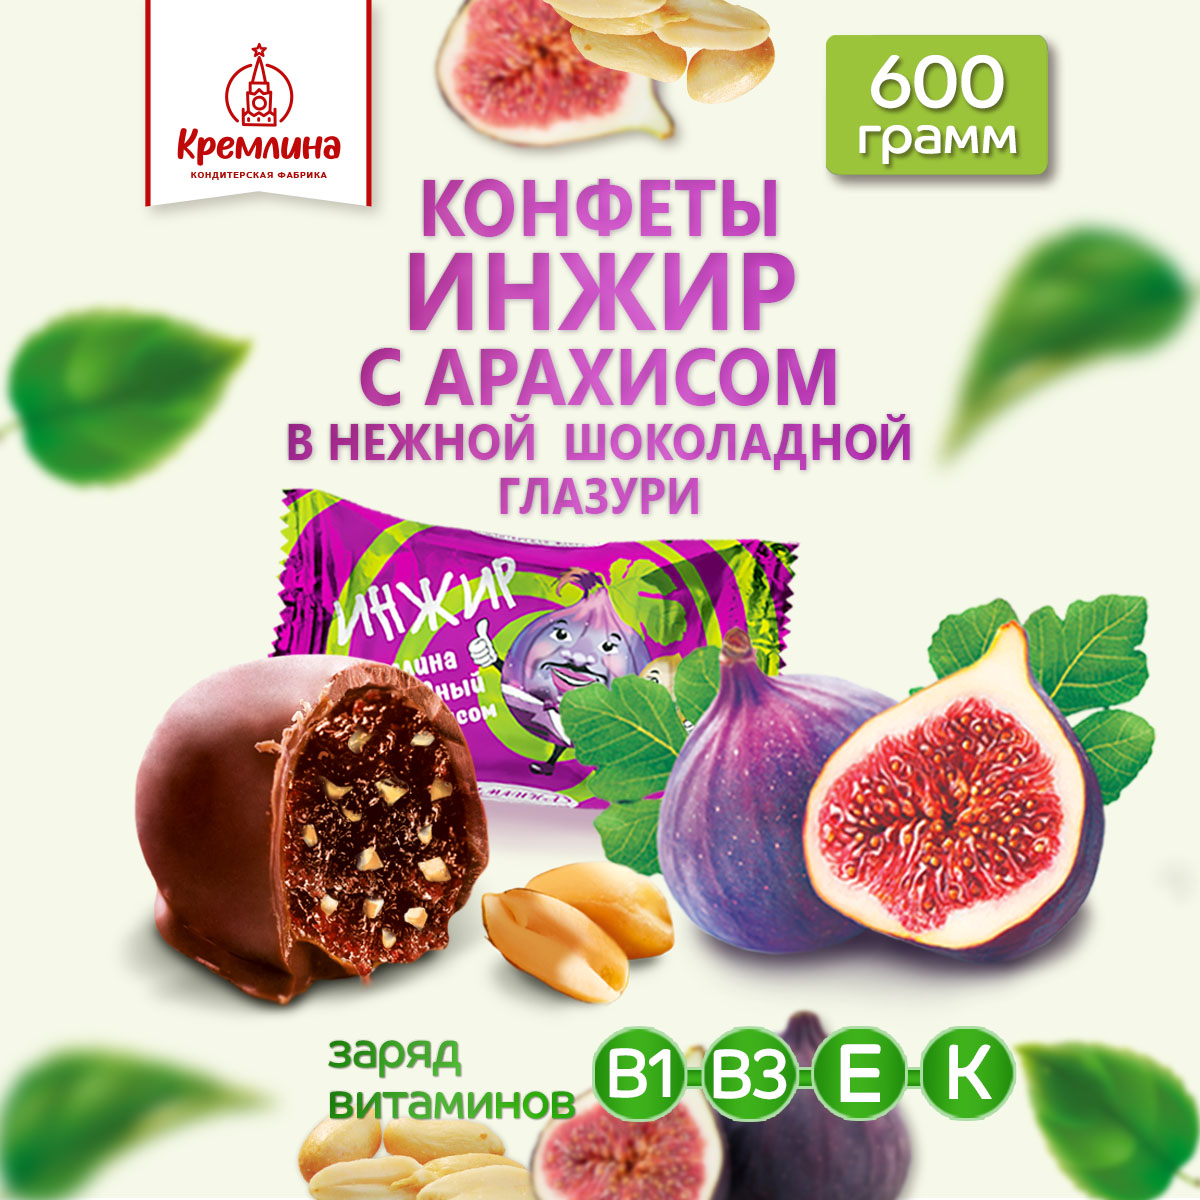 Конфеты Кремлина инжир в глазури с арахисом пакет 600 г - фото 1